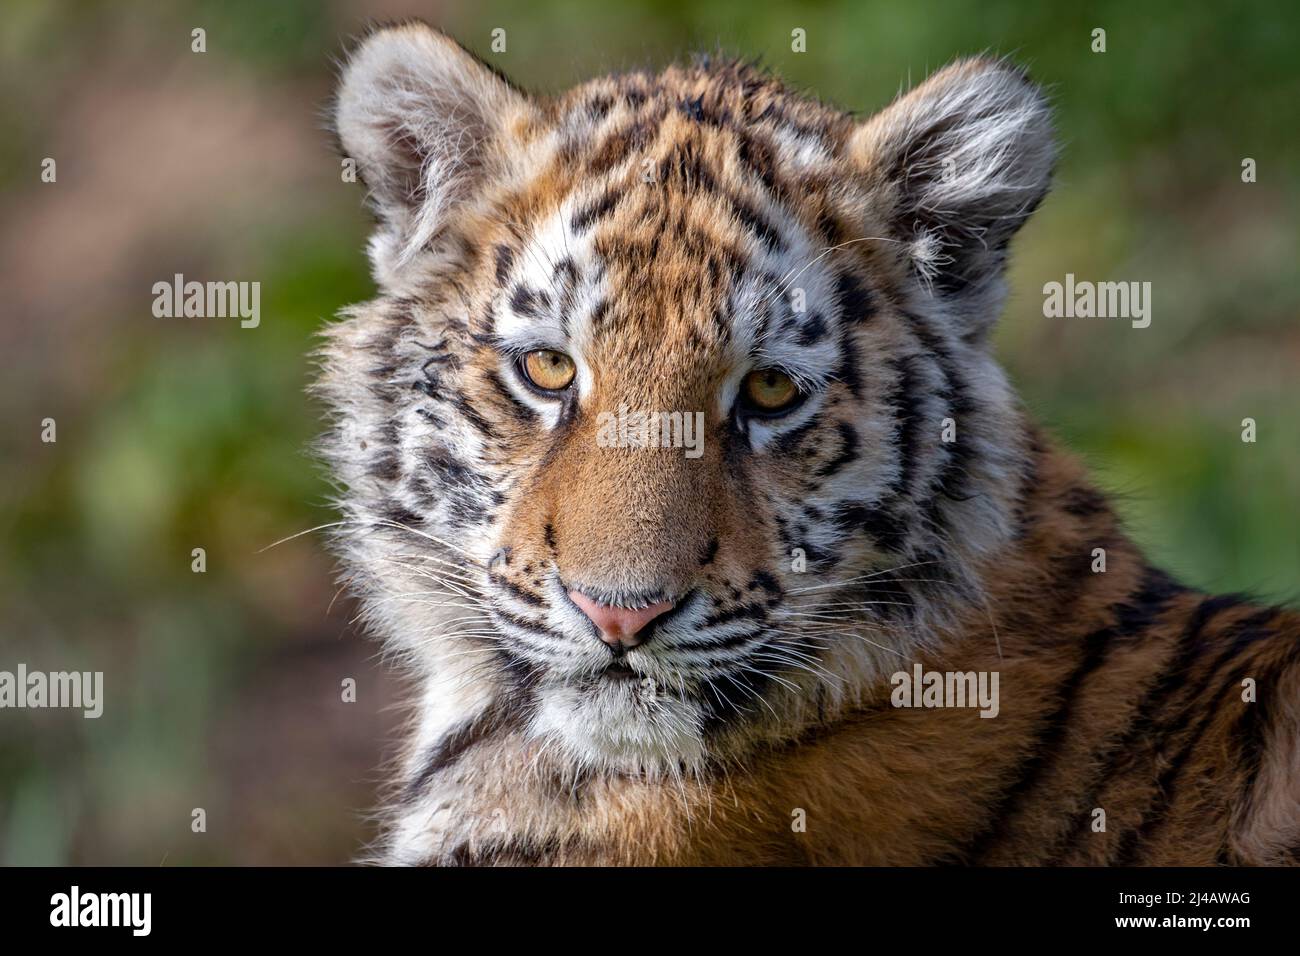 Amur (Siberian) tiger cub looking into camera Stock Photo